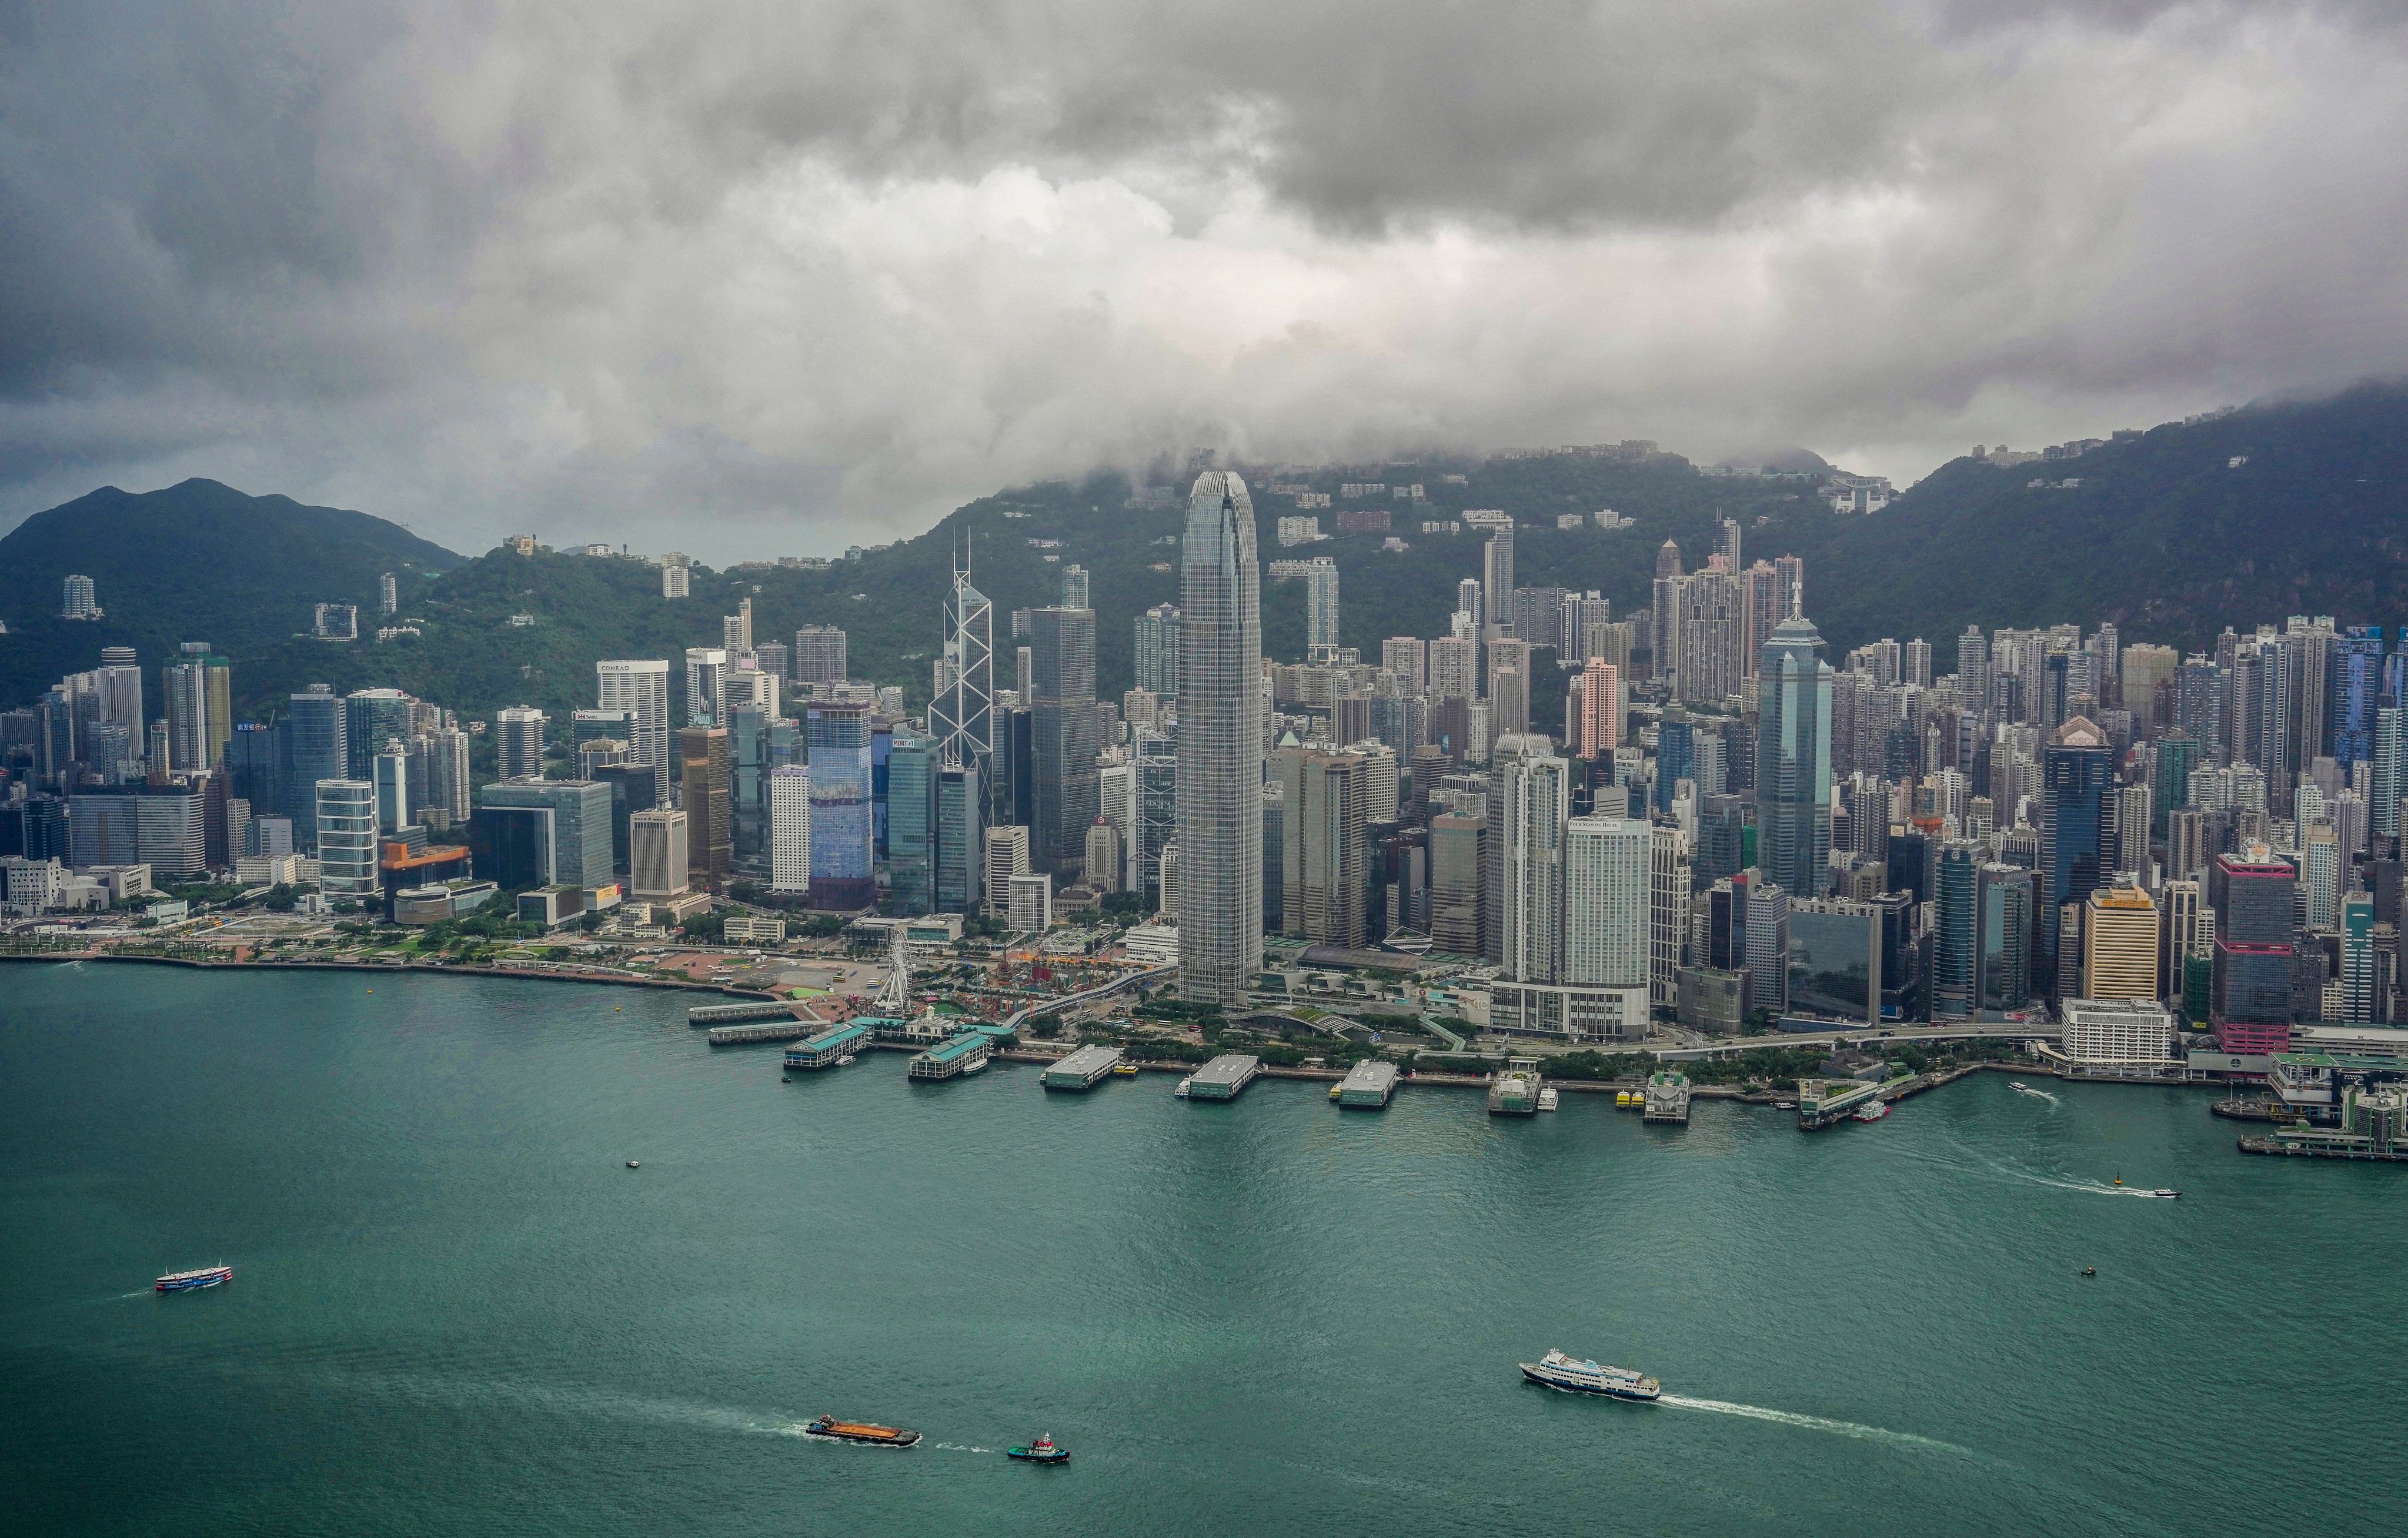 Far East Consortium chairman David Chiu has dismissed the idea that “Hong Kong is over”. Photo: Elson Li